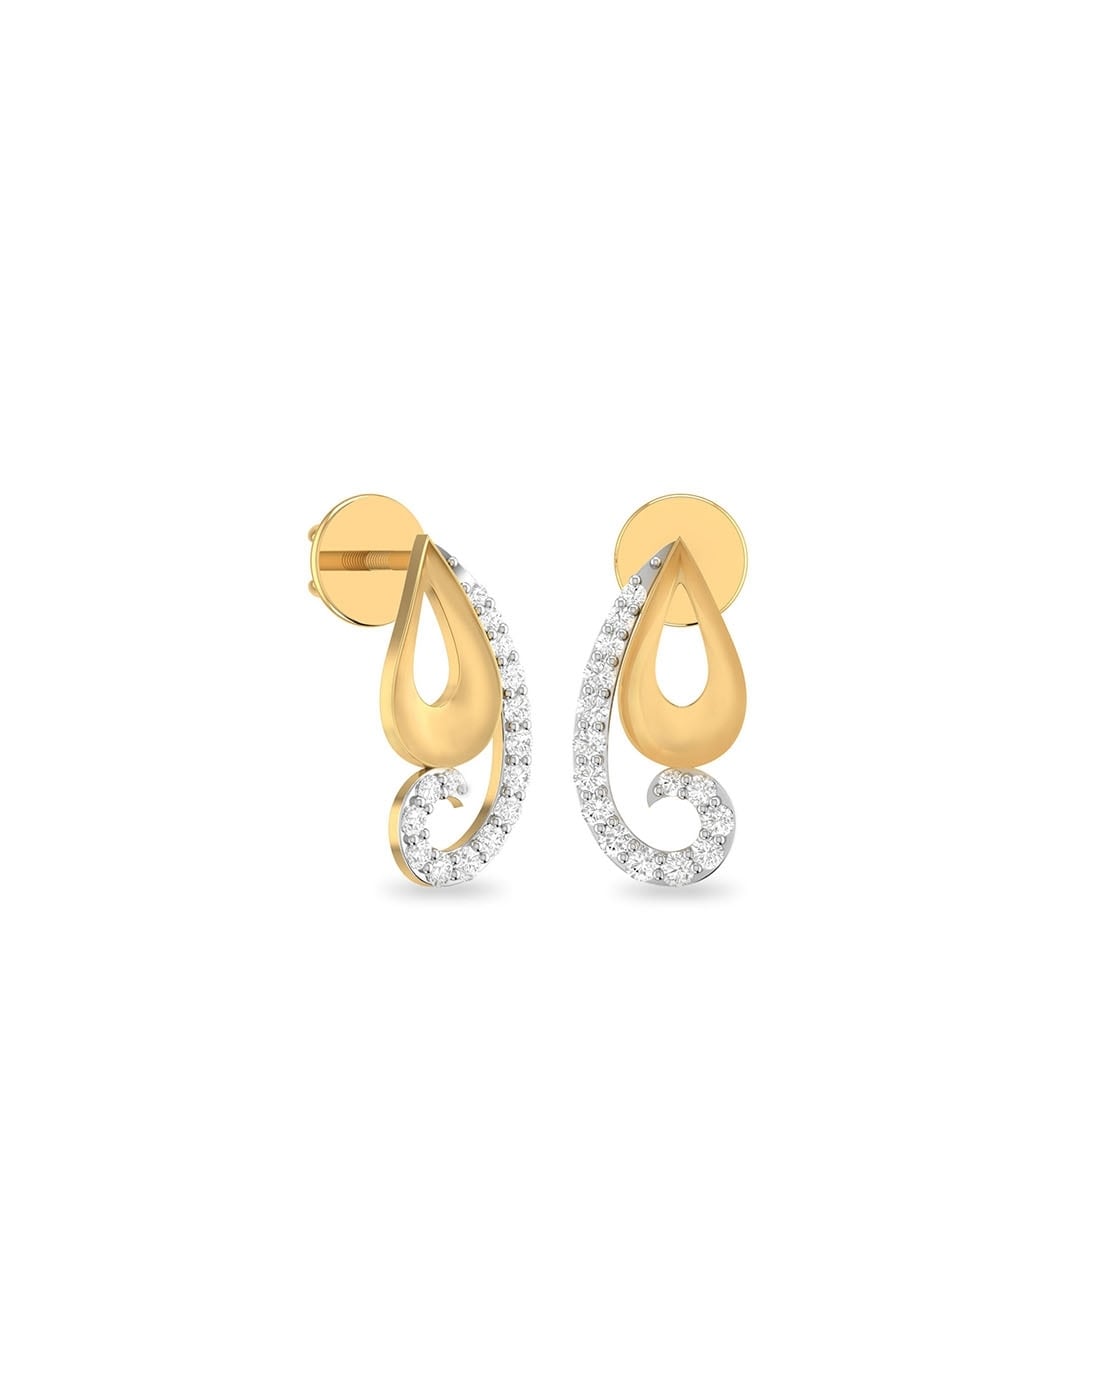 The Parina Diamond Earrings by PC Jeweller